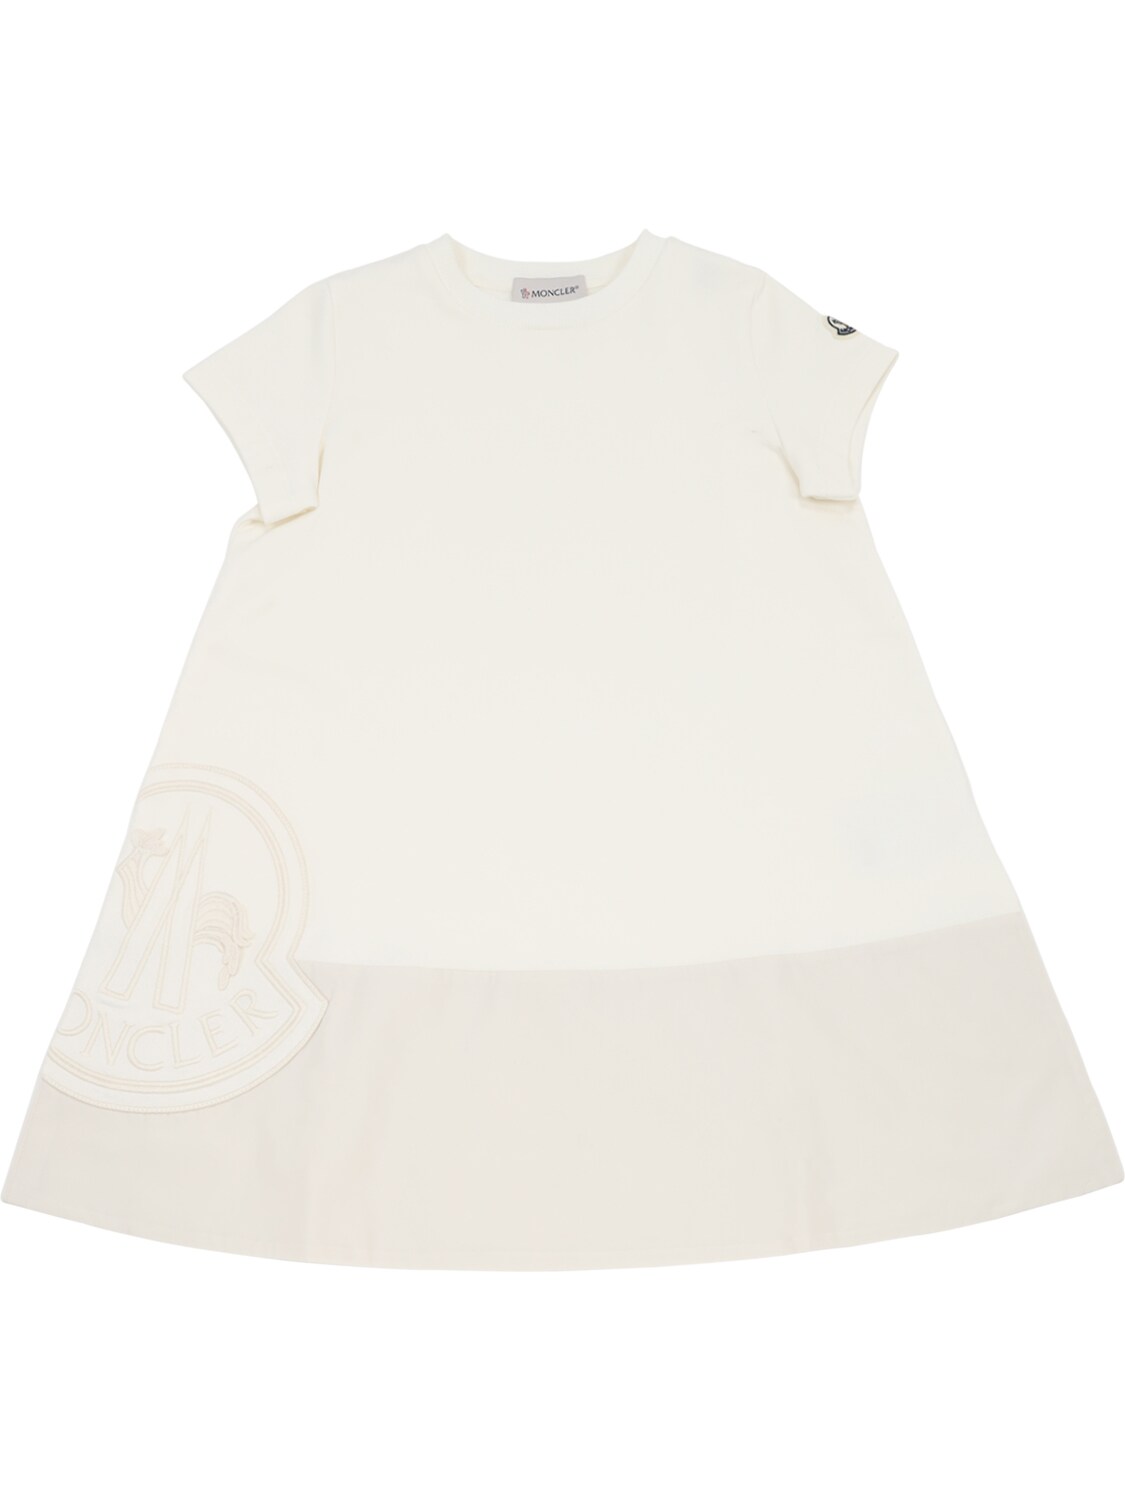 Moncler Kids' Cotton Sweatshirt Dress In White